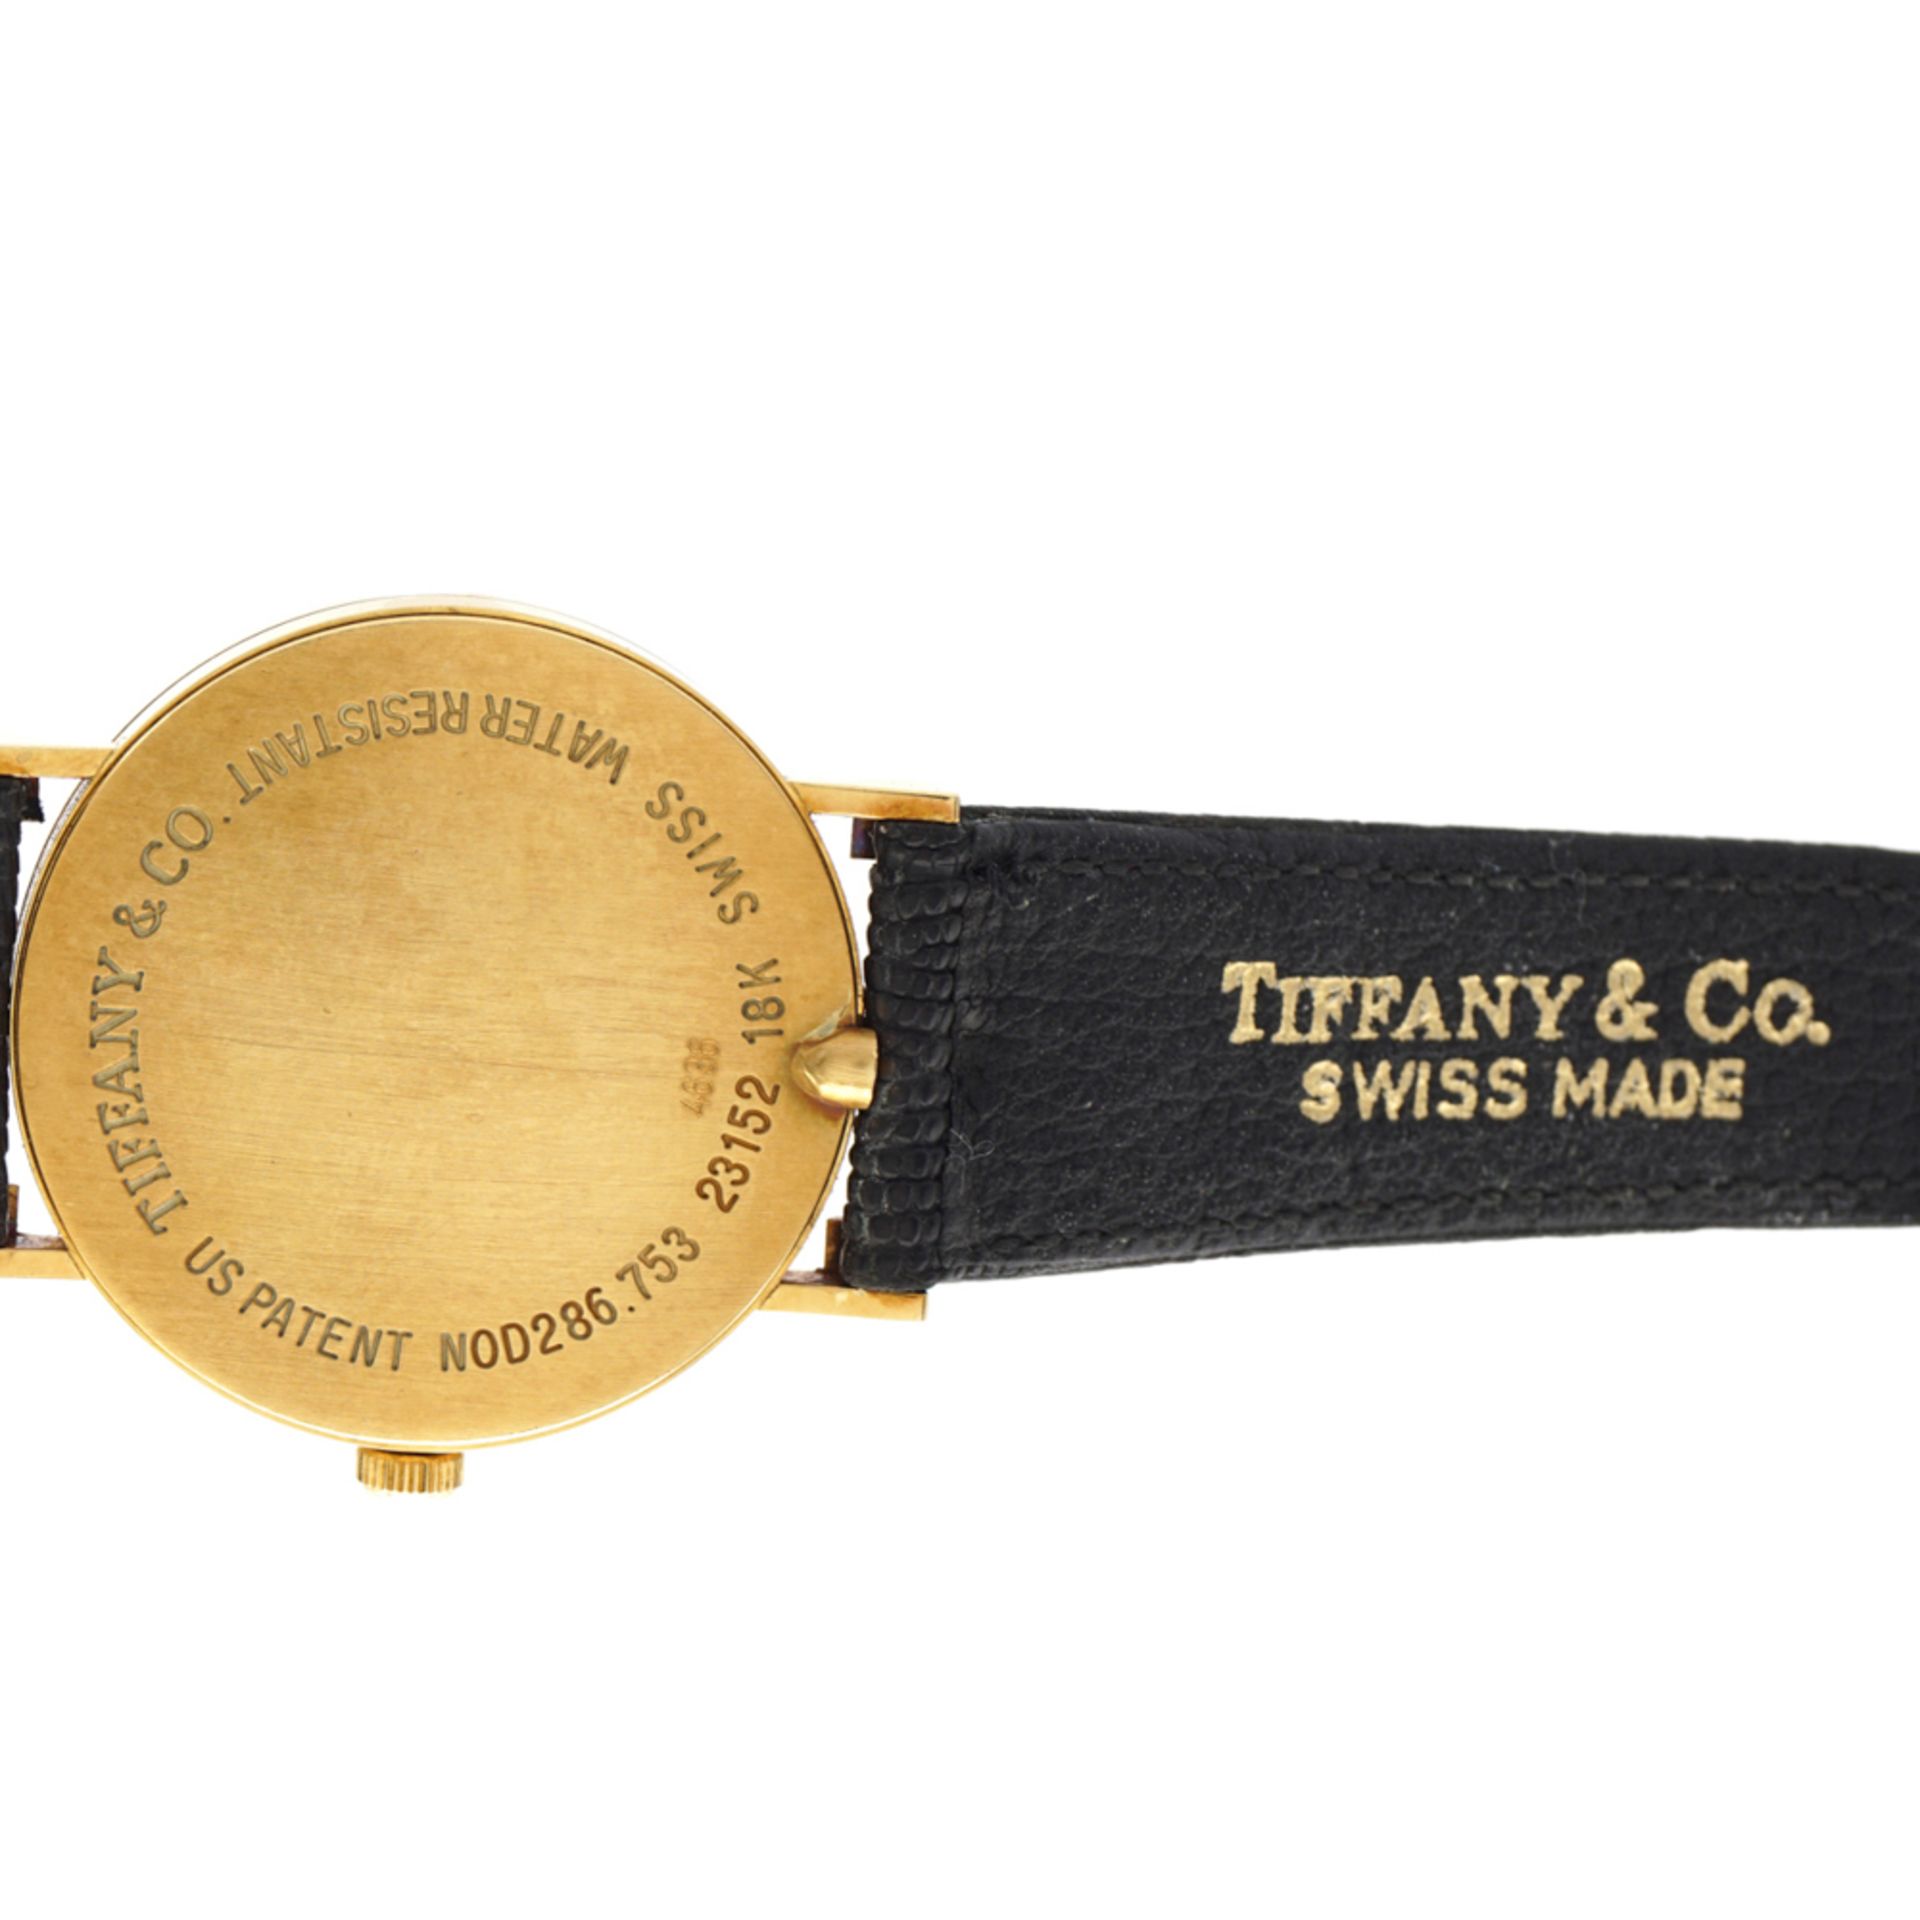 Audemars Piguet for Tiffany & Co. , vintage wrist watch 1970s circa - Image 2 of 2